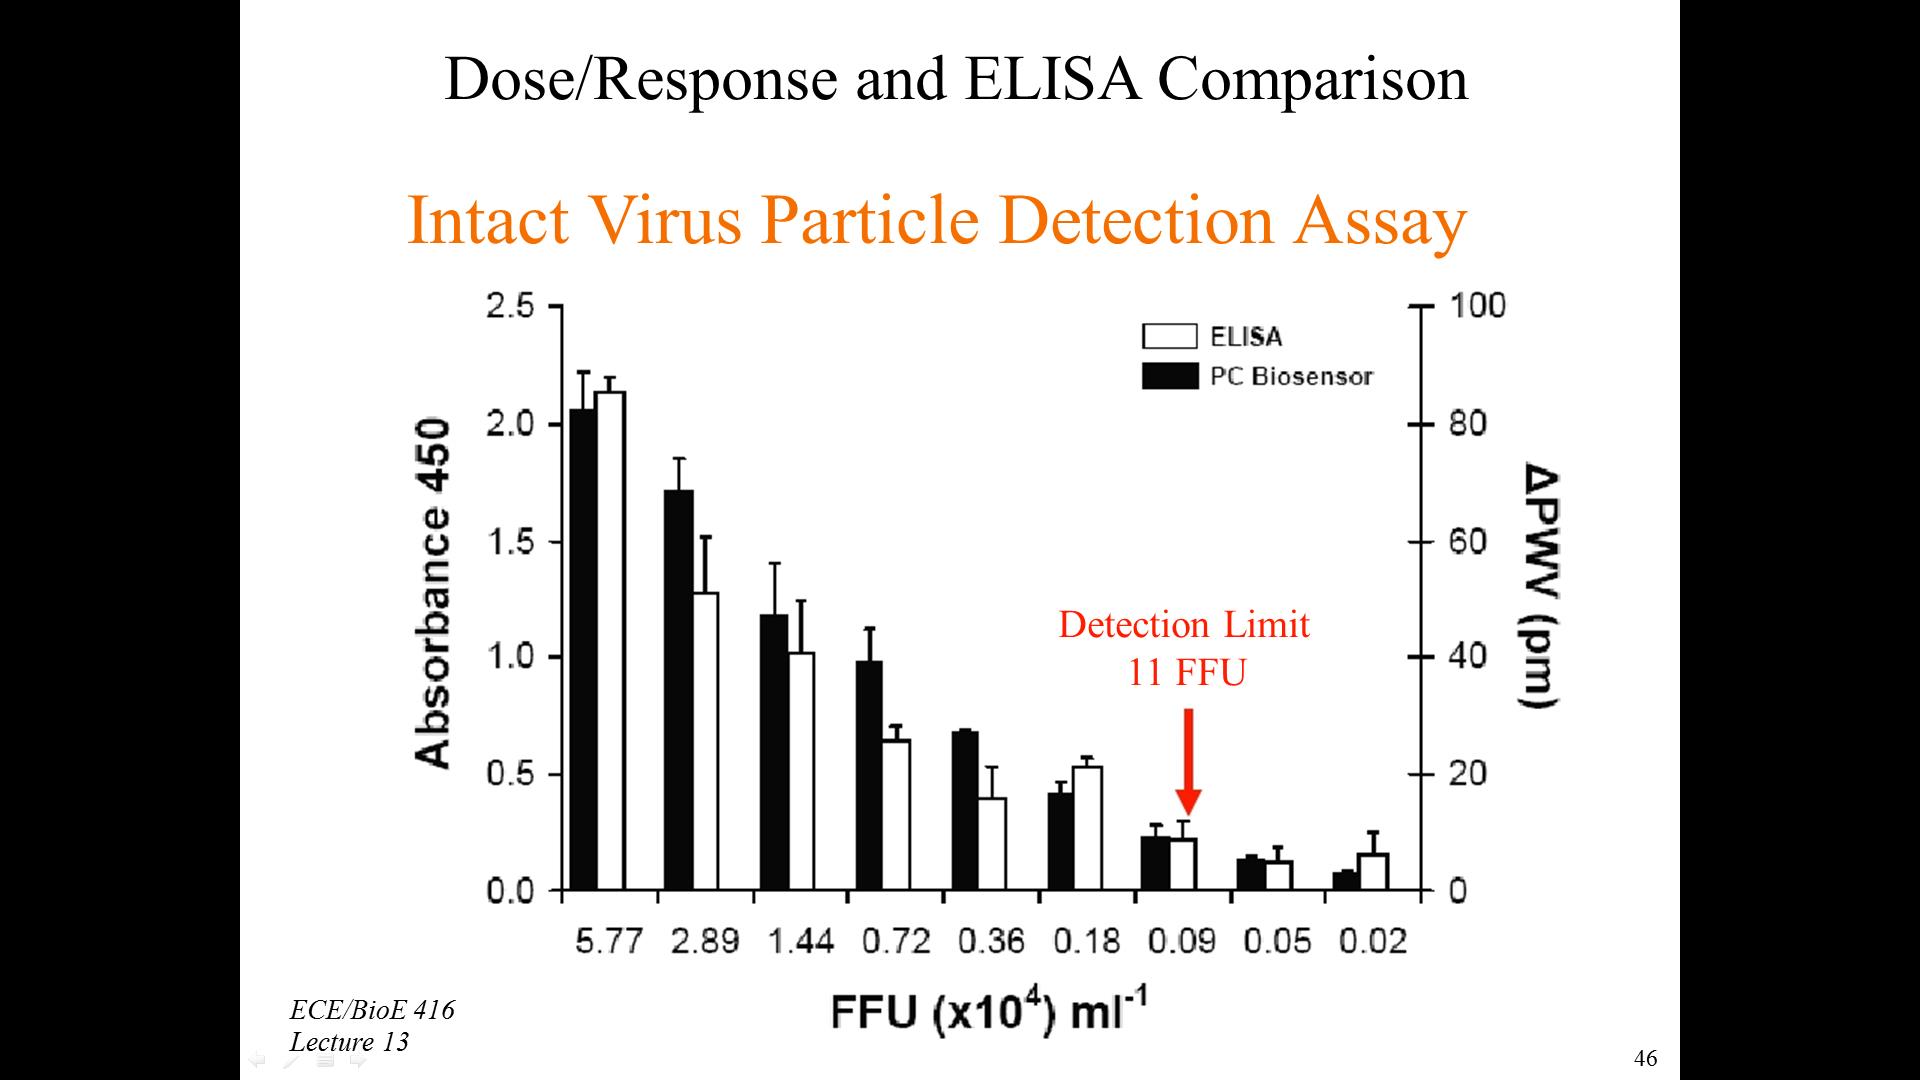 Dose/Response and ELISA Comparison